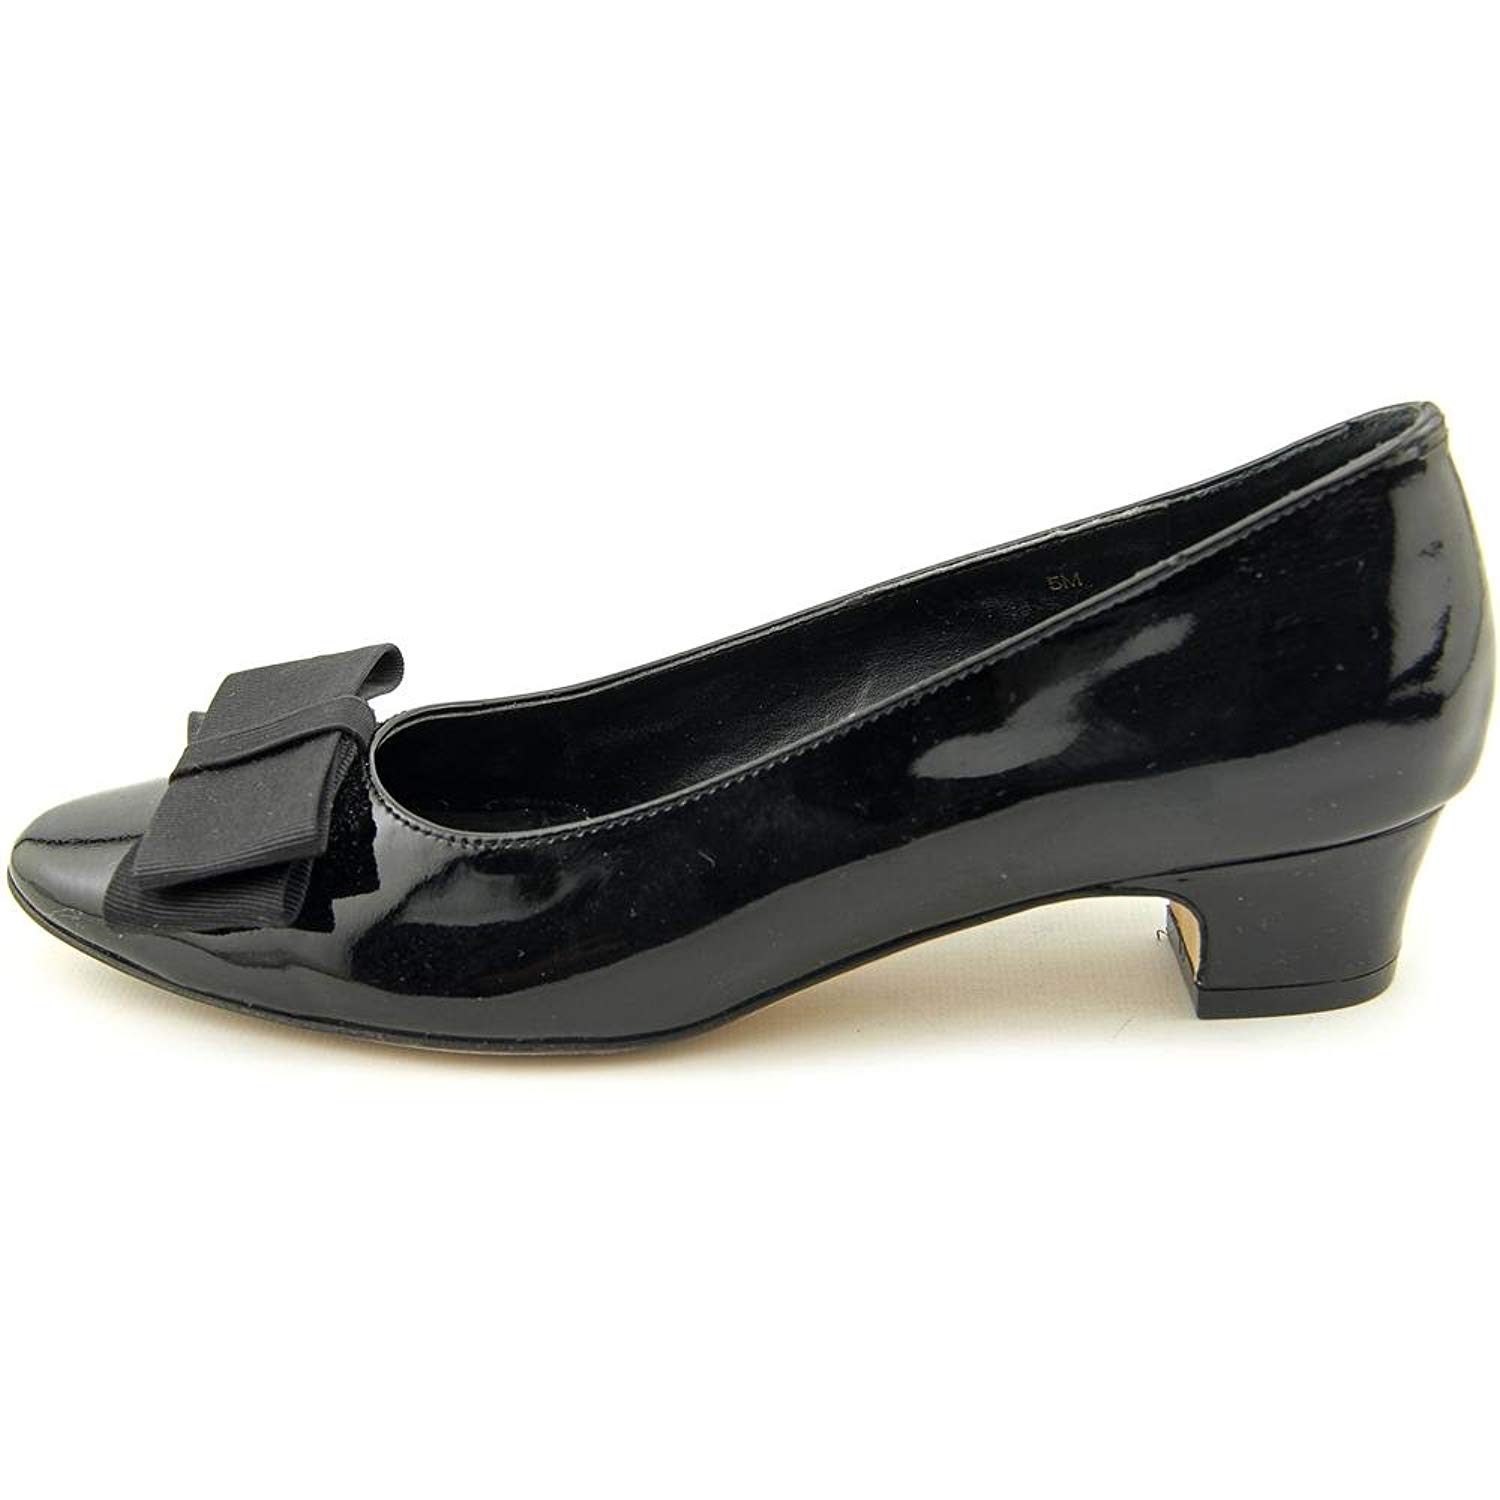 Vaneli Womens Heels & Pumps in Black Color, Size 5.5 KGW | eBay